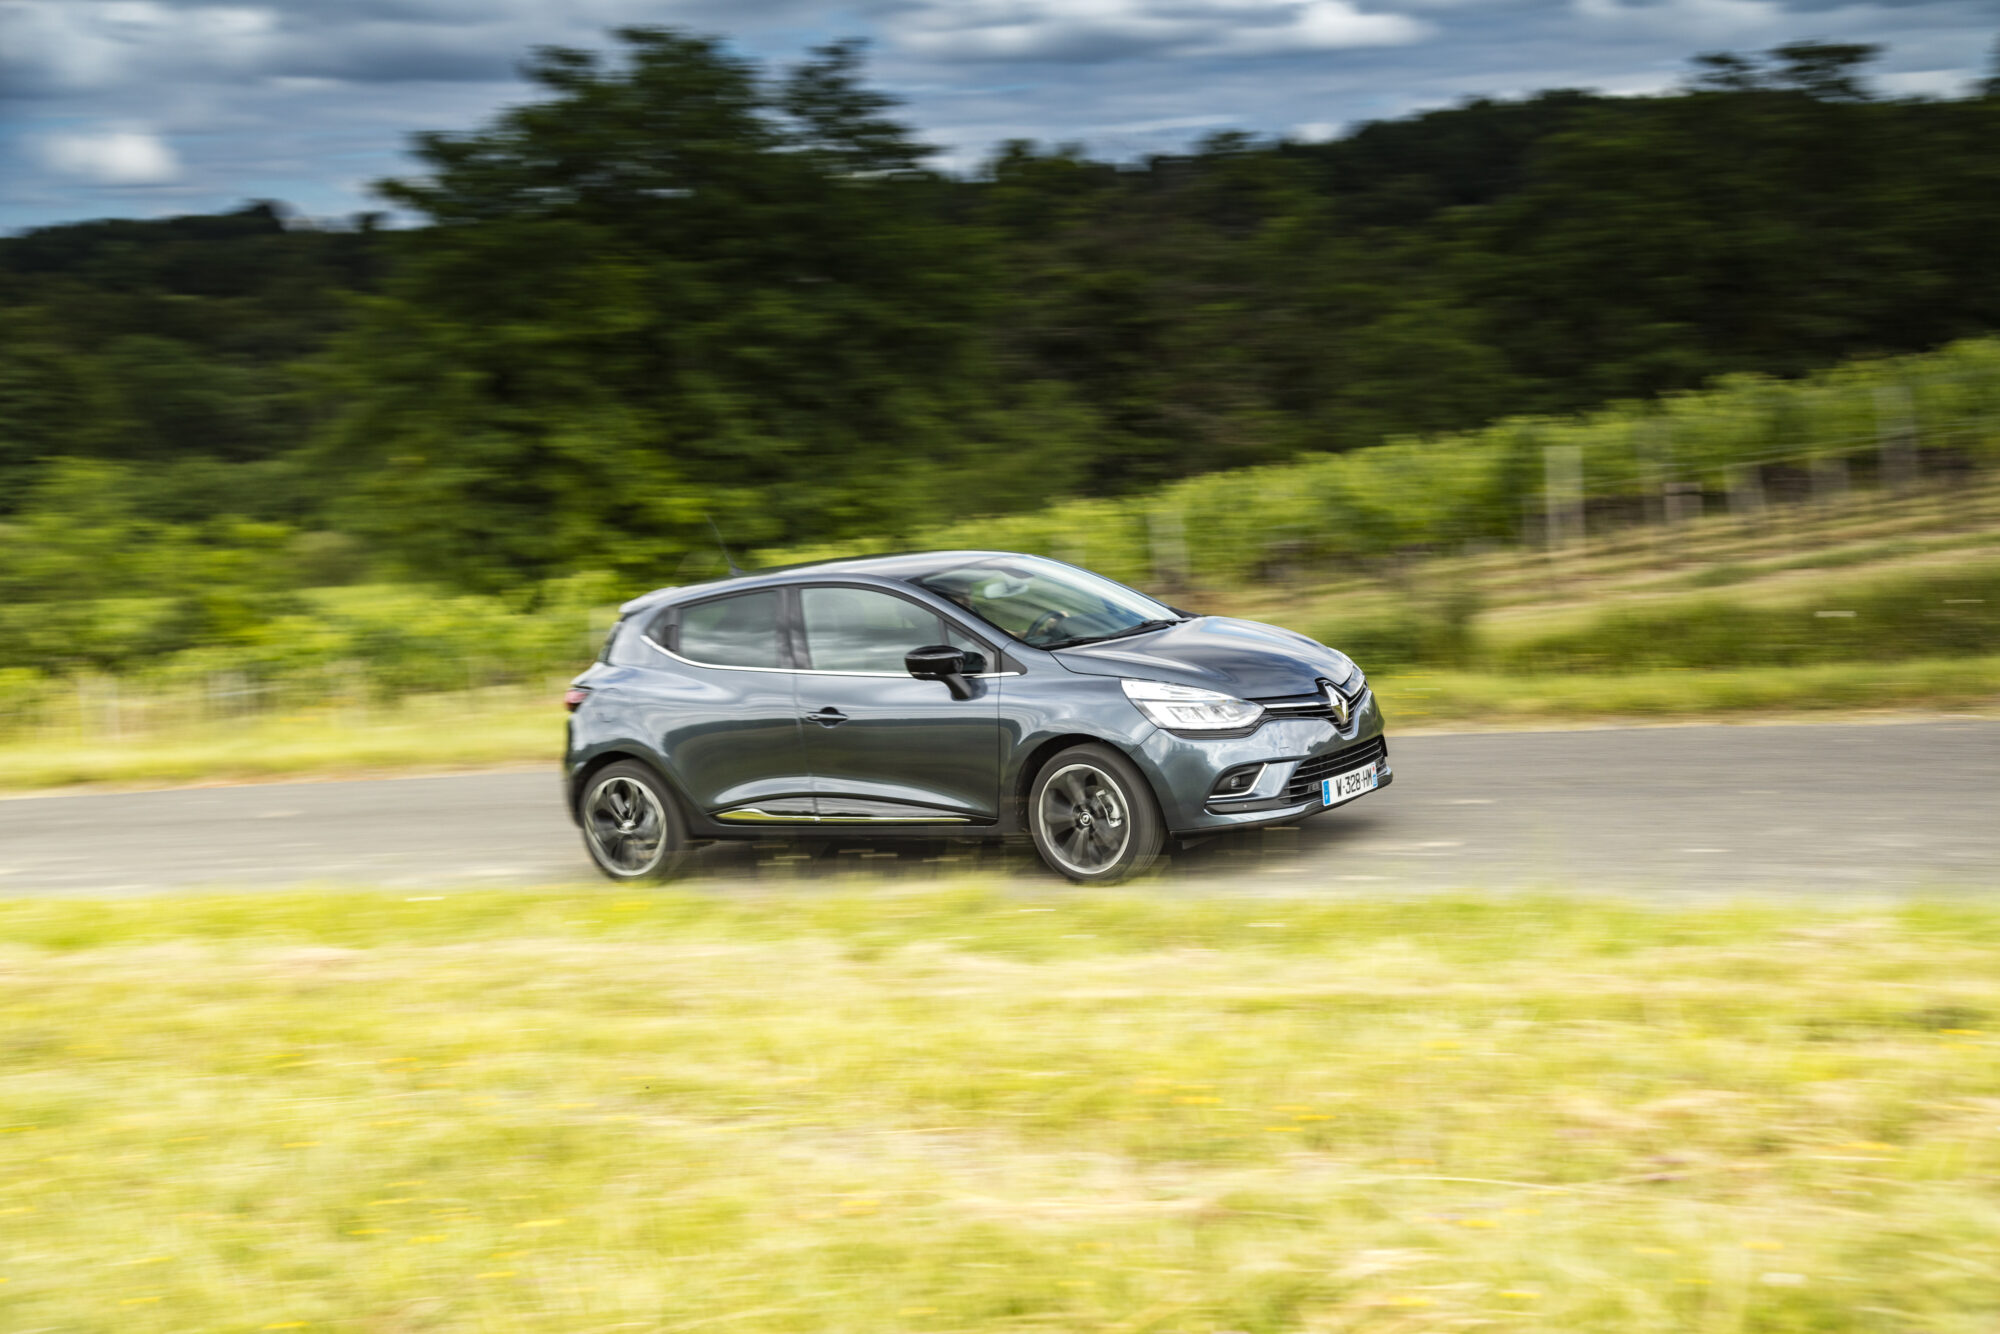 2016 - Nuova Renault CLIO